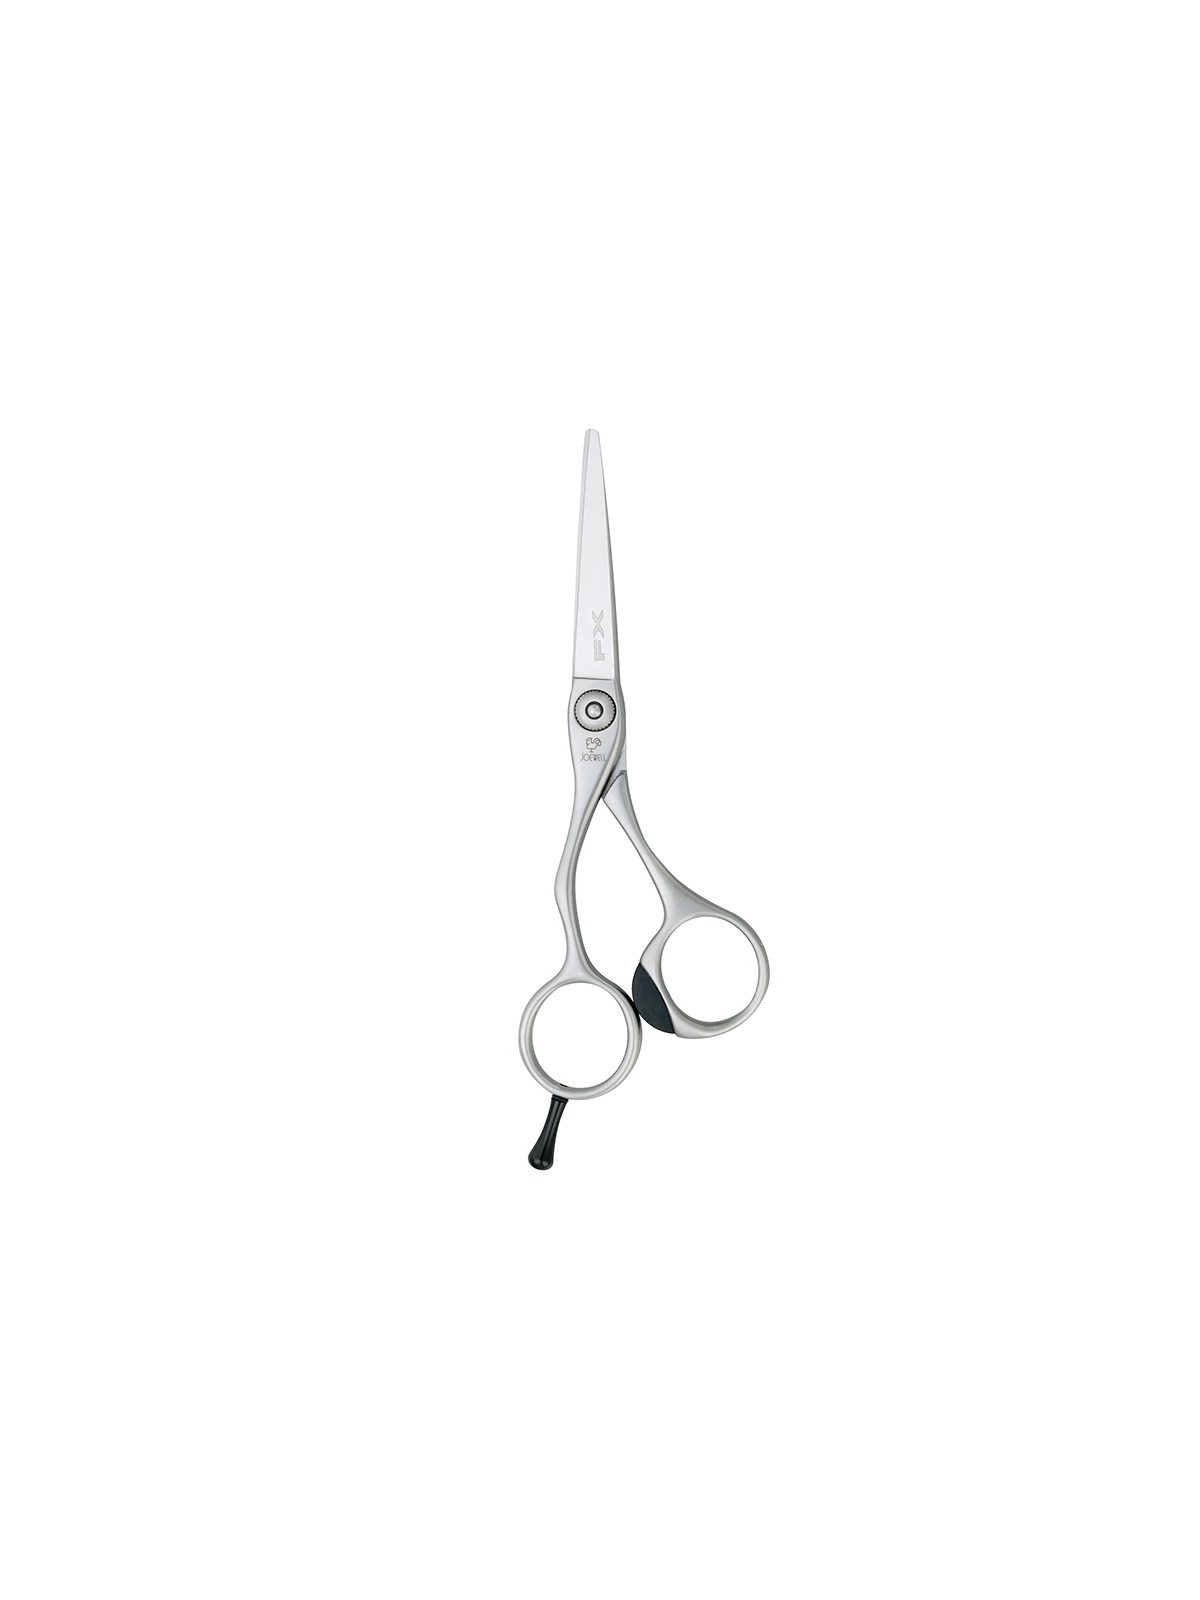 Joewell FX LH left hand cutting scissors